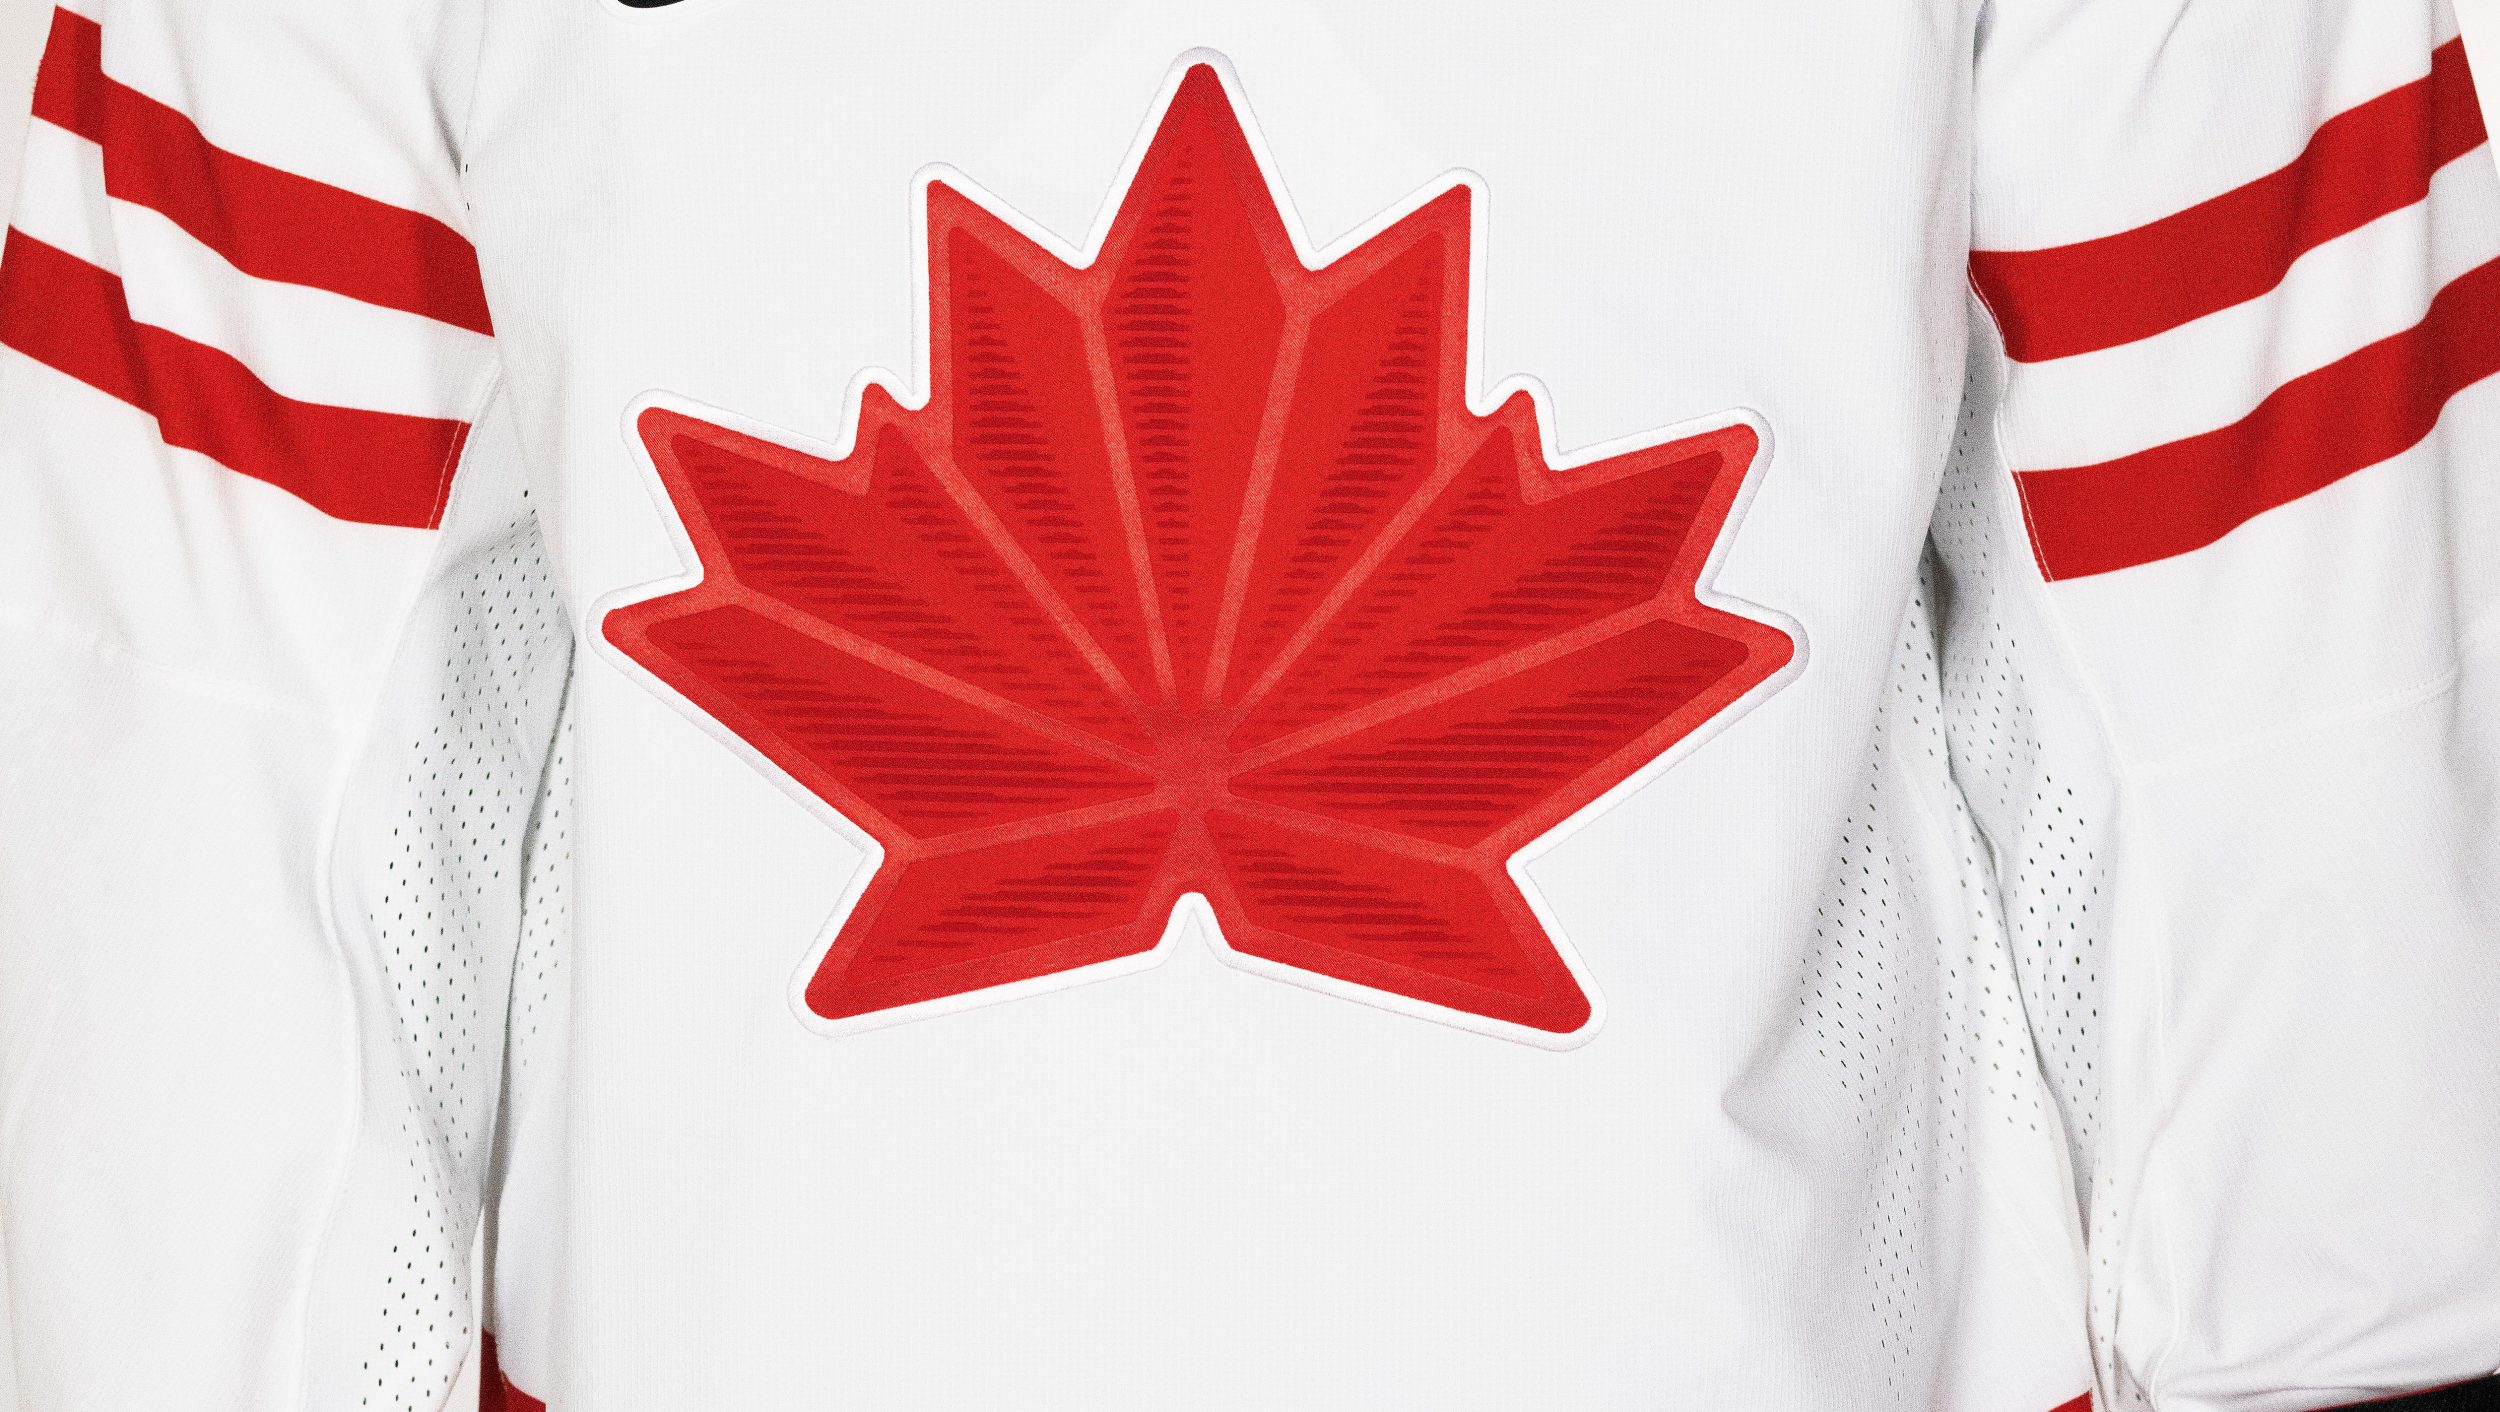 Hockey Canada reveals trio of jerseys to be worn at Beijing 2022